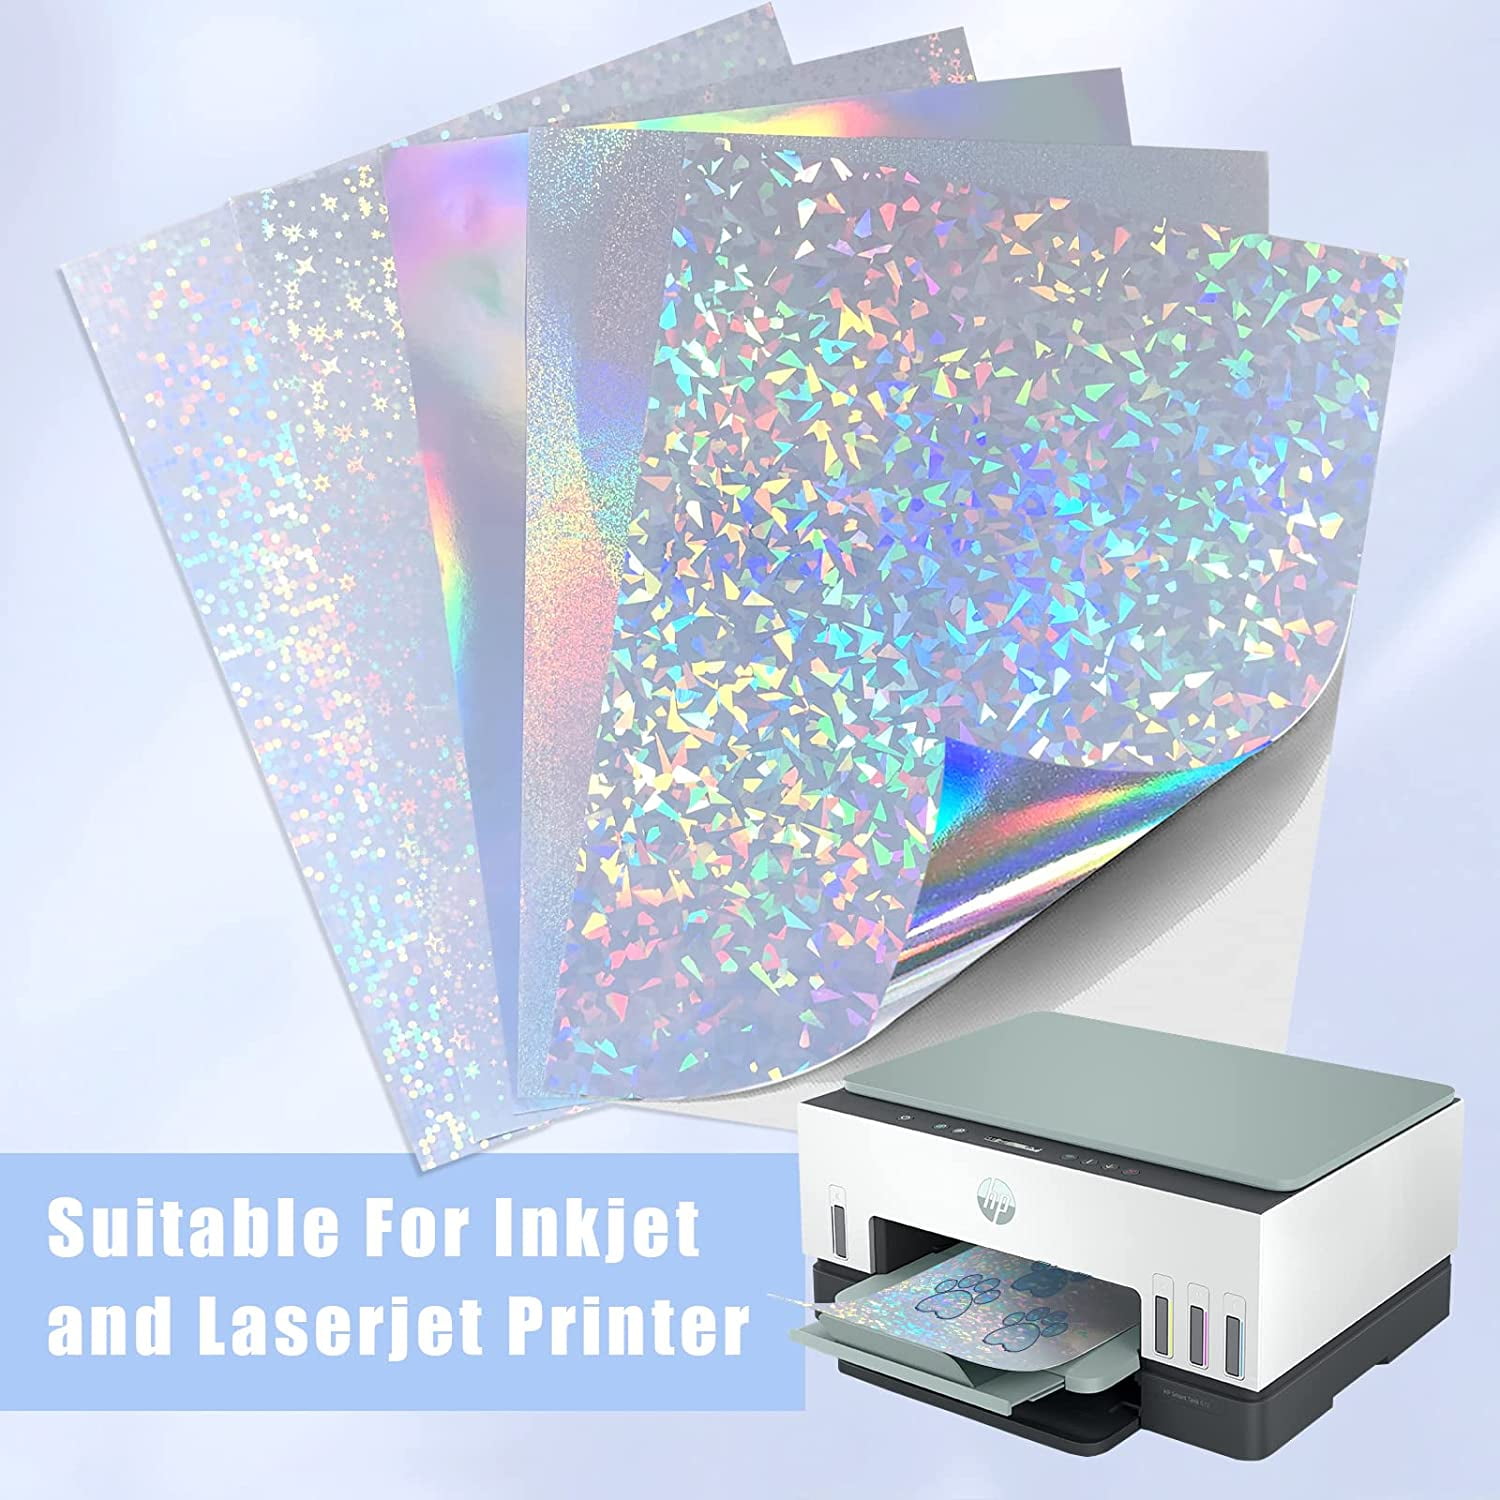 Uinkit Premium Clear Vinyl Sticker Paper for Inkjet Printer - Bulk Pack 100 Sheets  Clear Waterproof